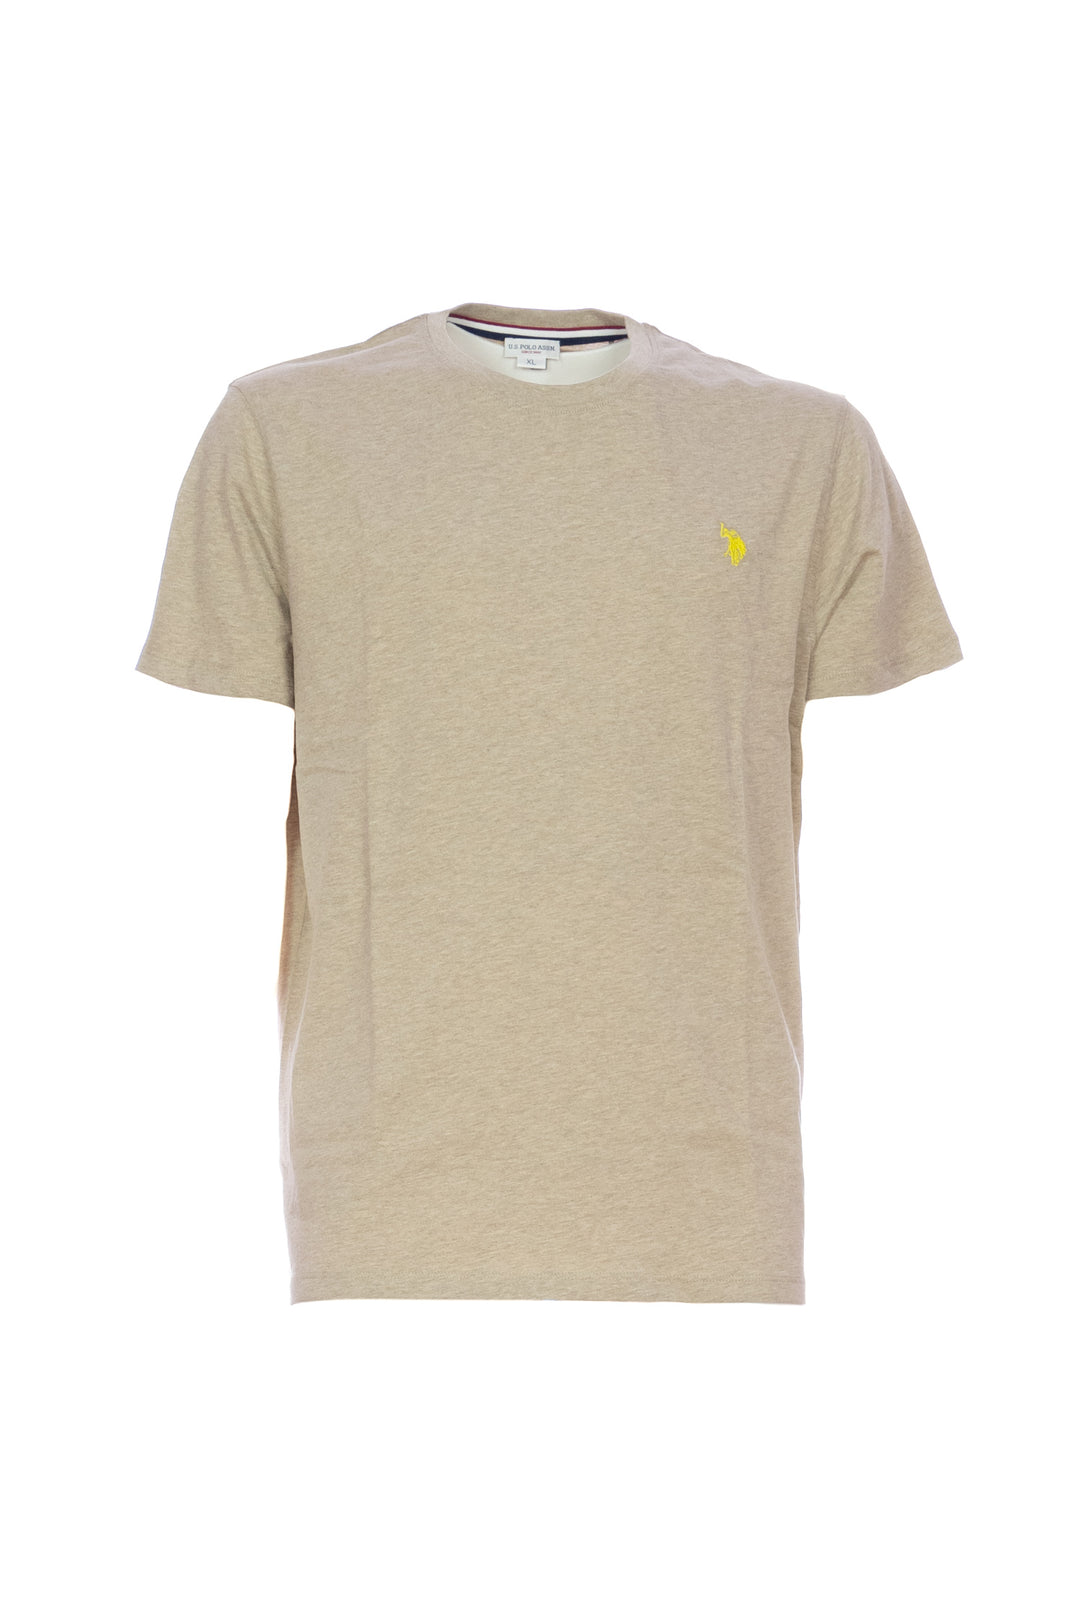 U.S. POLO ASSN. T-shirt beige melange in cotone con logo ricamato - Mancinelli 1954